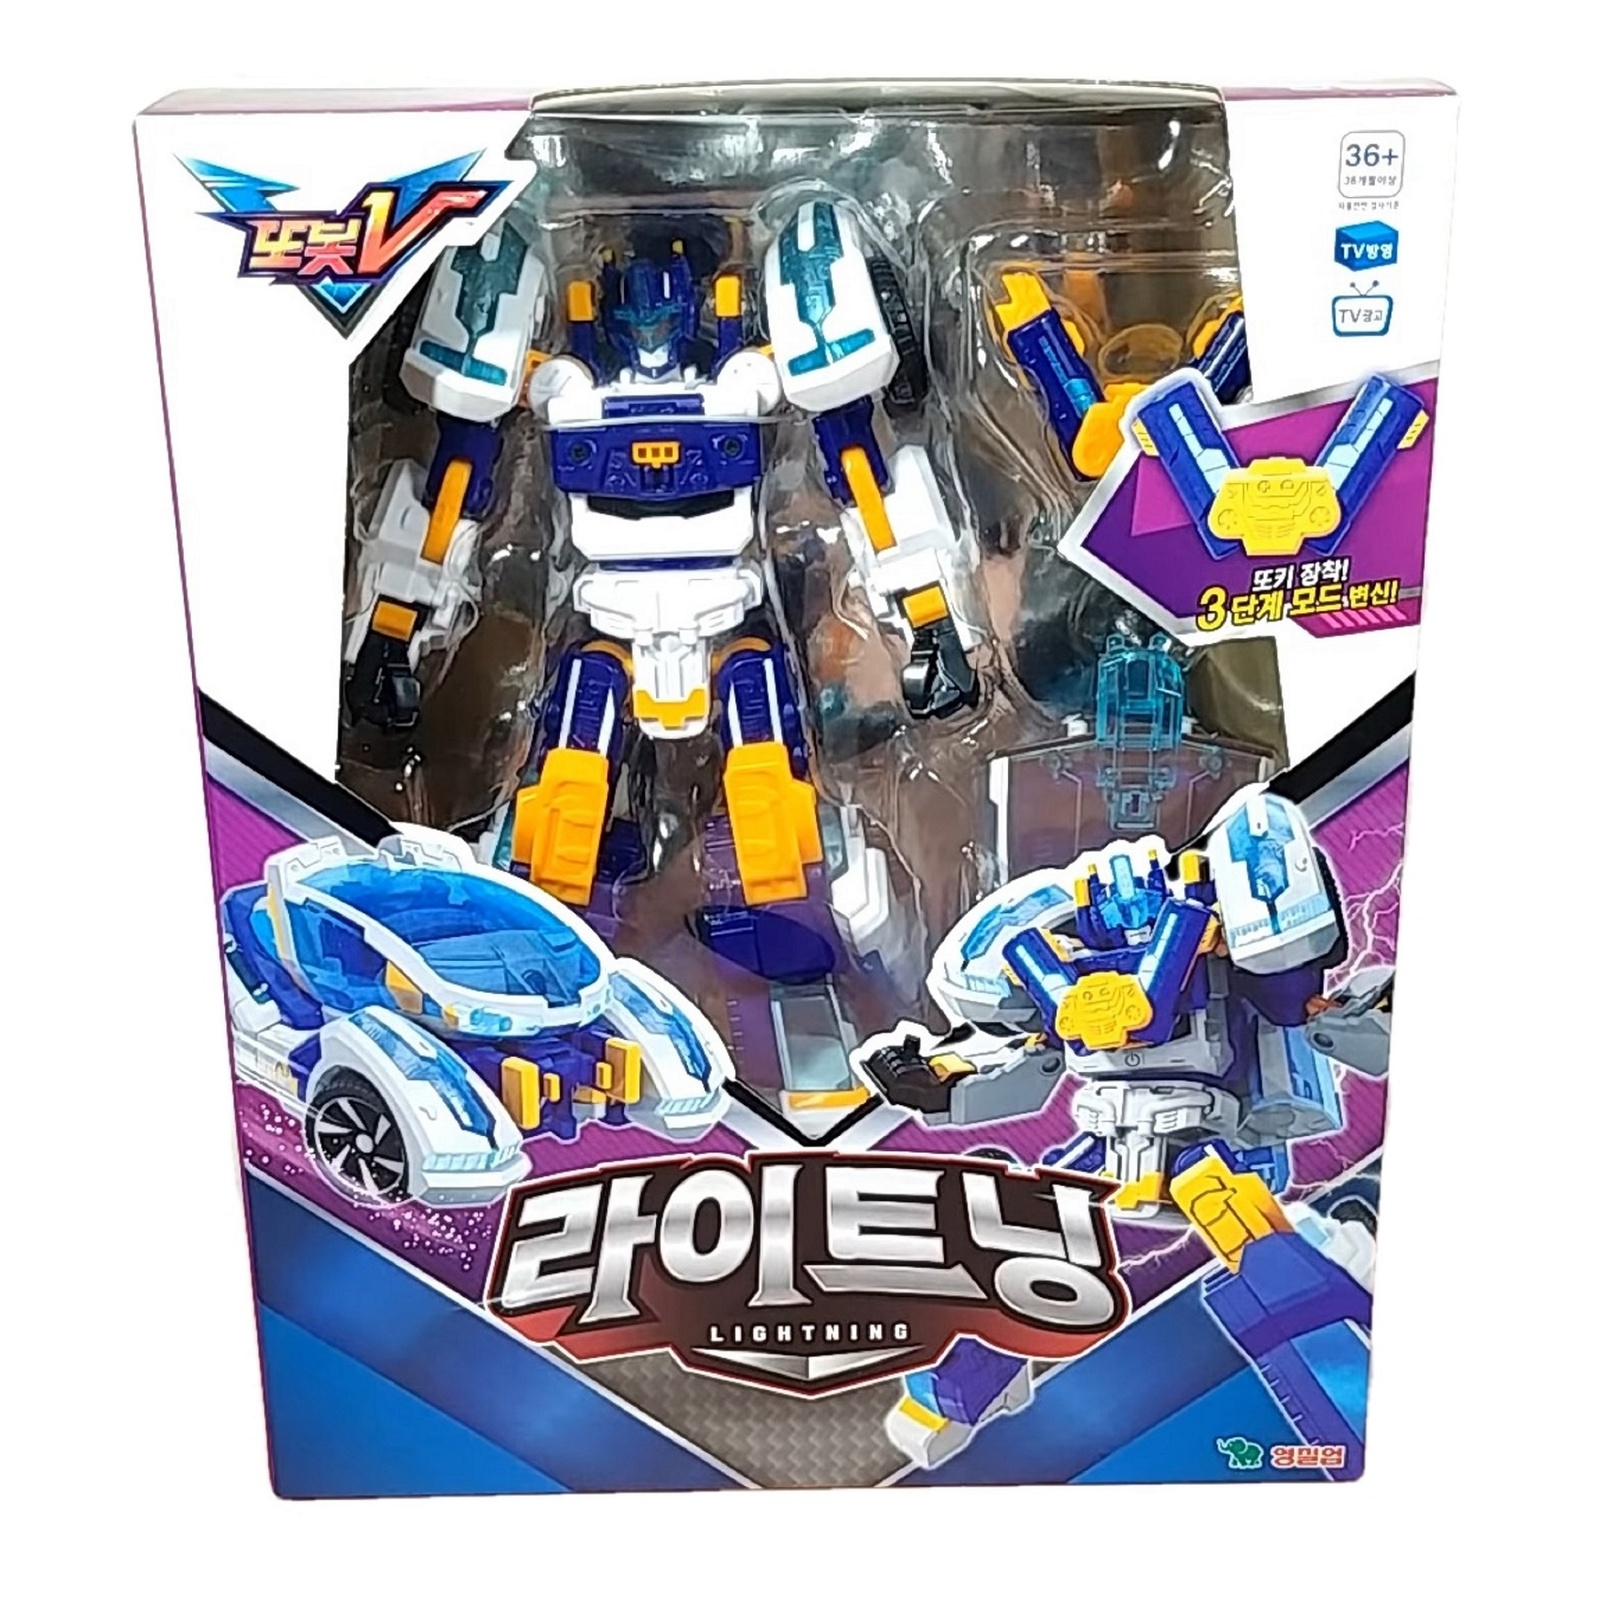 Tobot V Lightning Transformation Action Figure Robot Season 2 Toy Transformers Robots